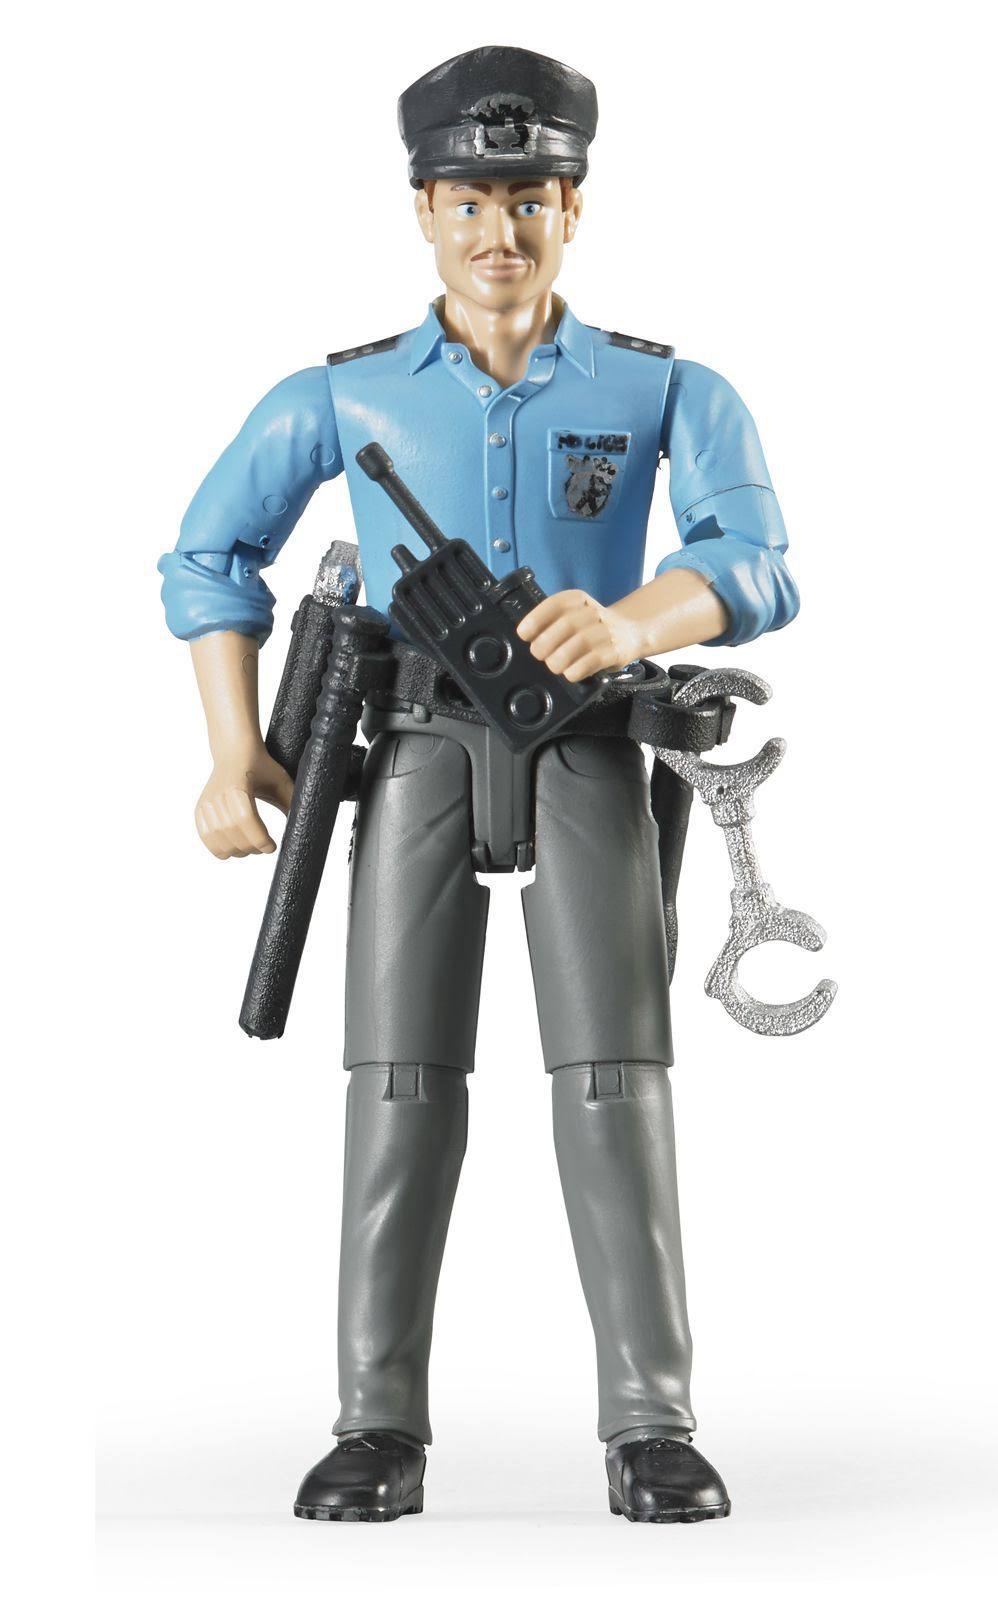 Bruder Policeman Light Skin Figure Toy